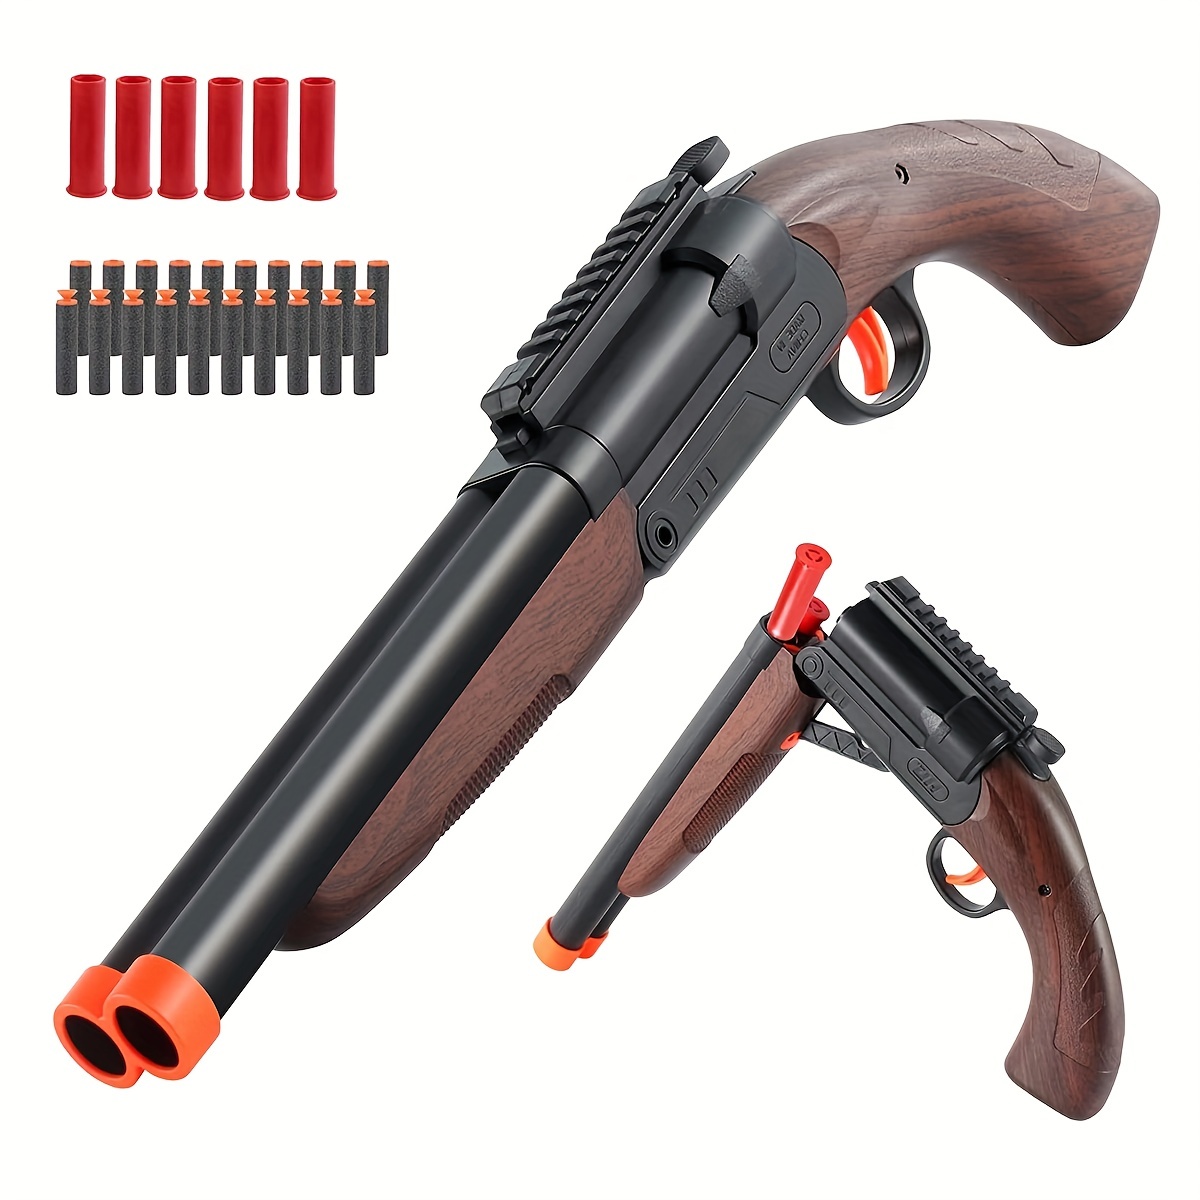 Sniper Barrett Toys Blasters Gun Pistol Foam Soft Bullet Shell Ejecting  Gift